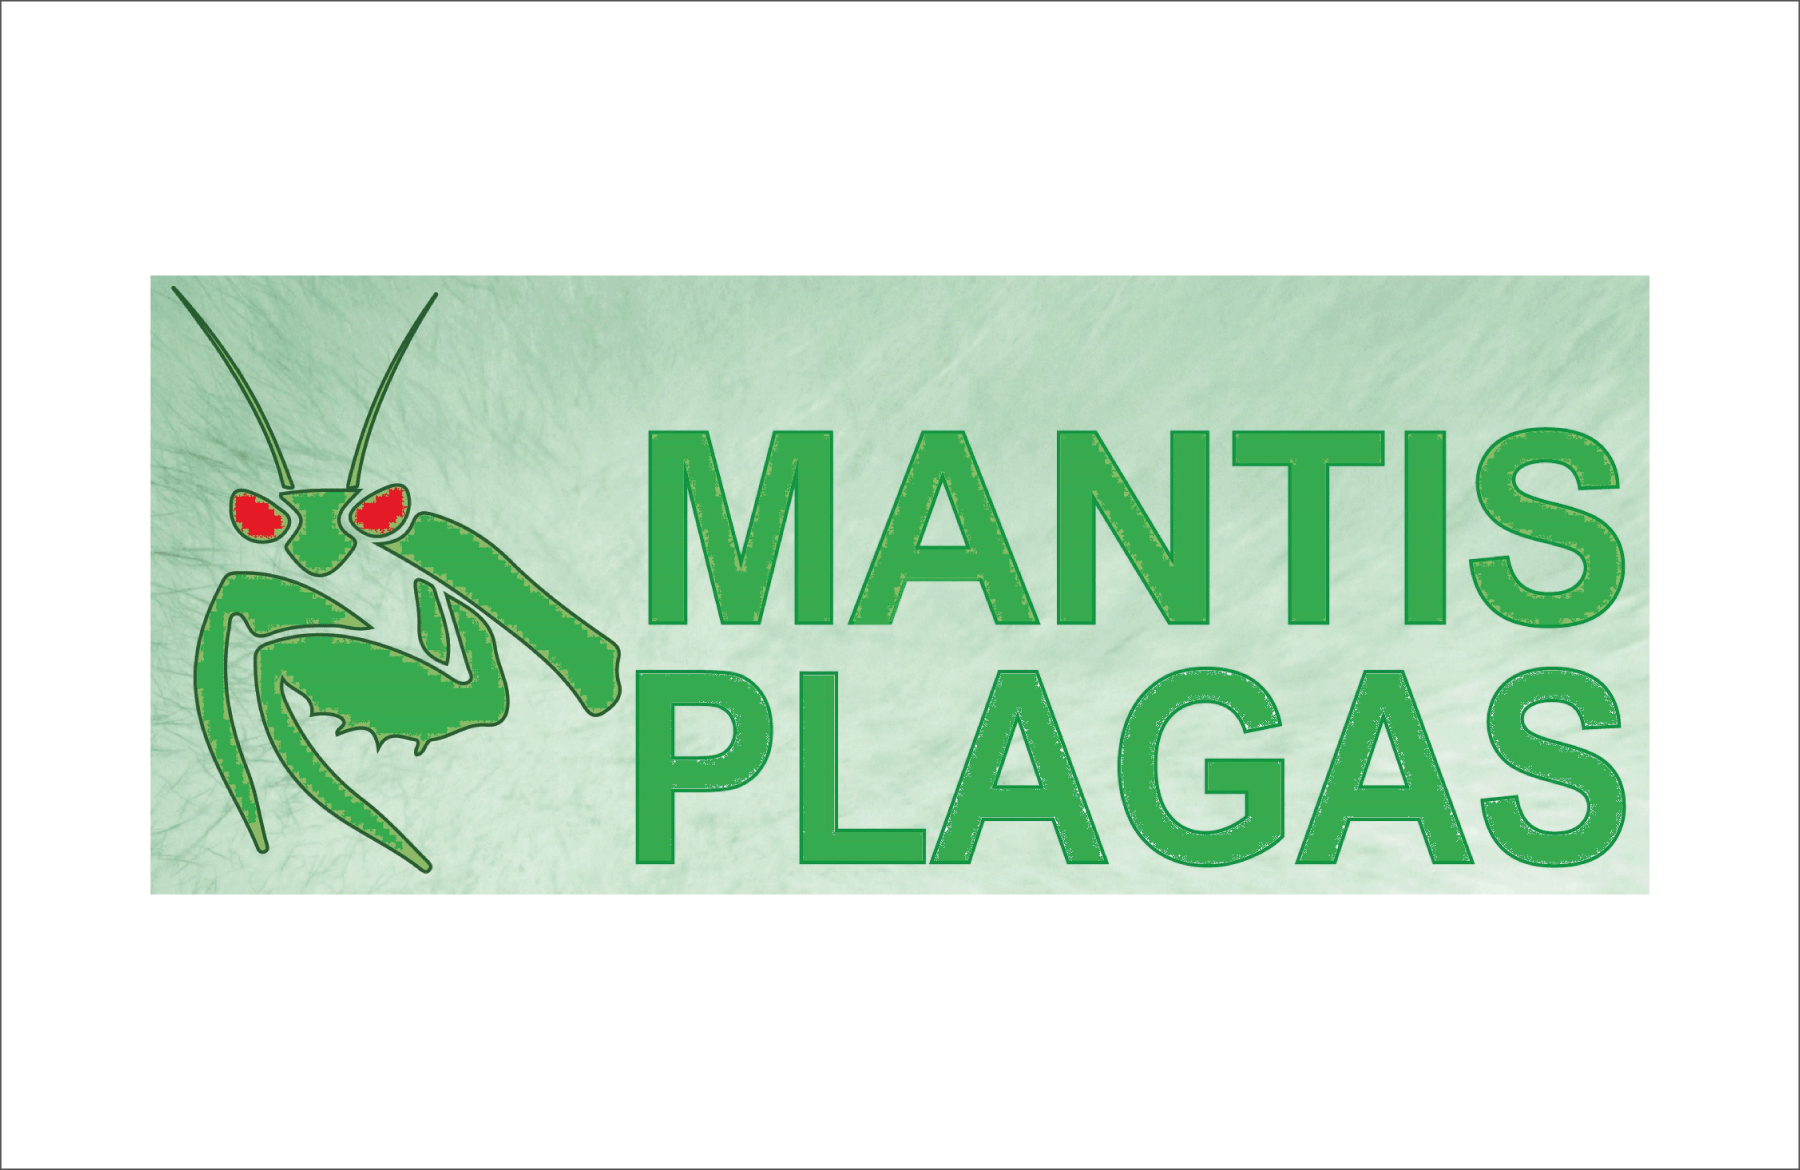  ¡MI CASA SEGURA!  Mantis plagas SpA: Sanitización Covid 19